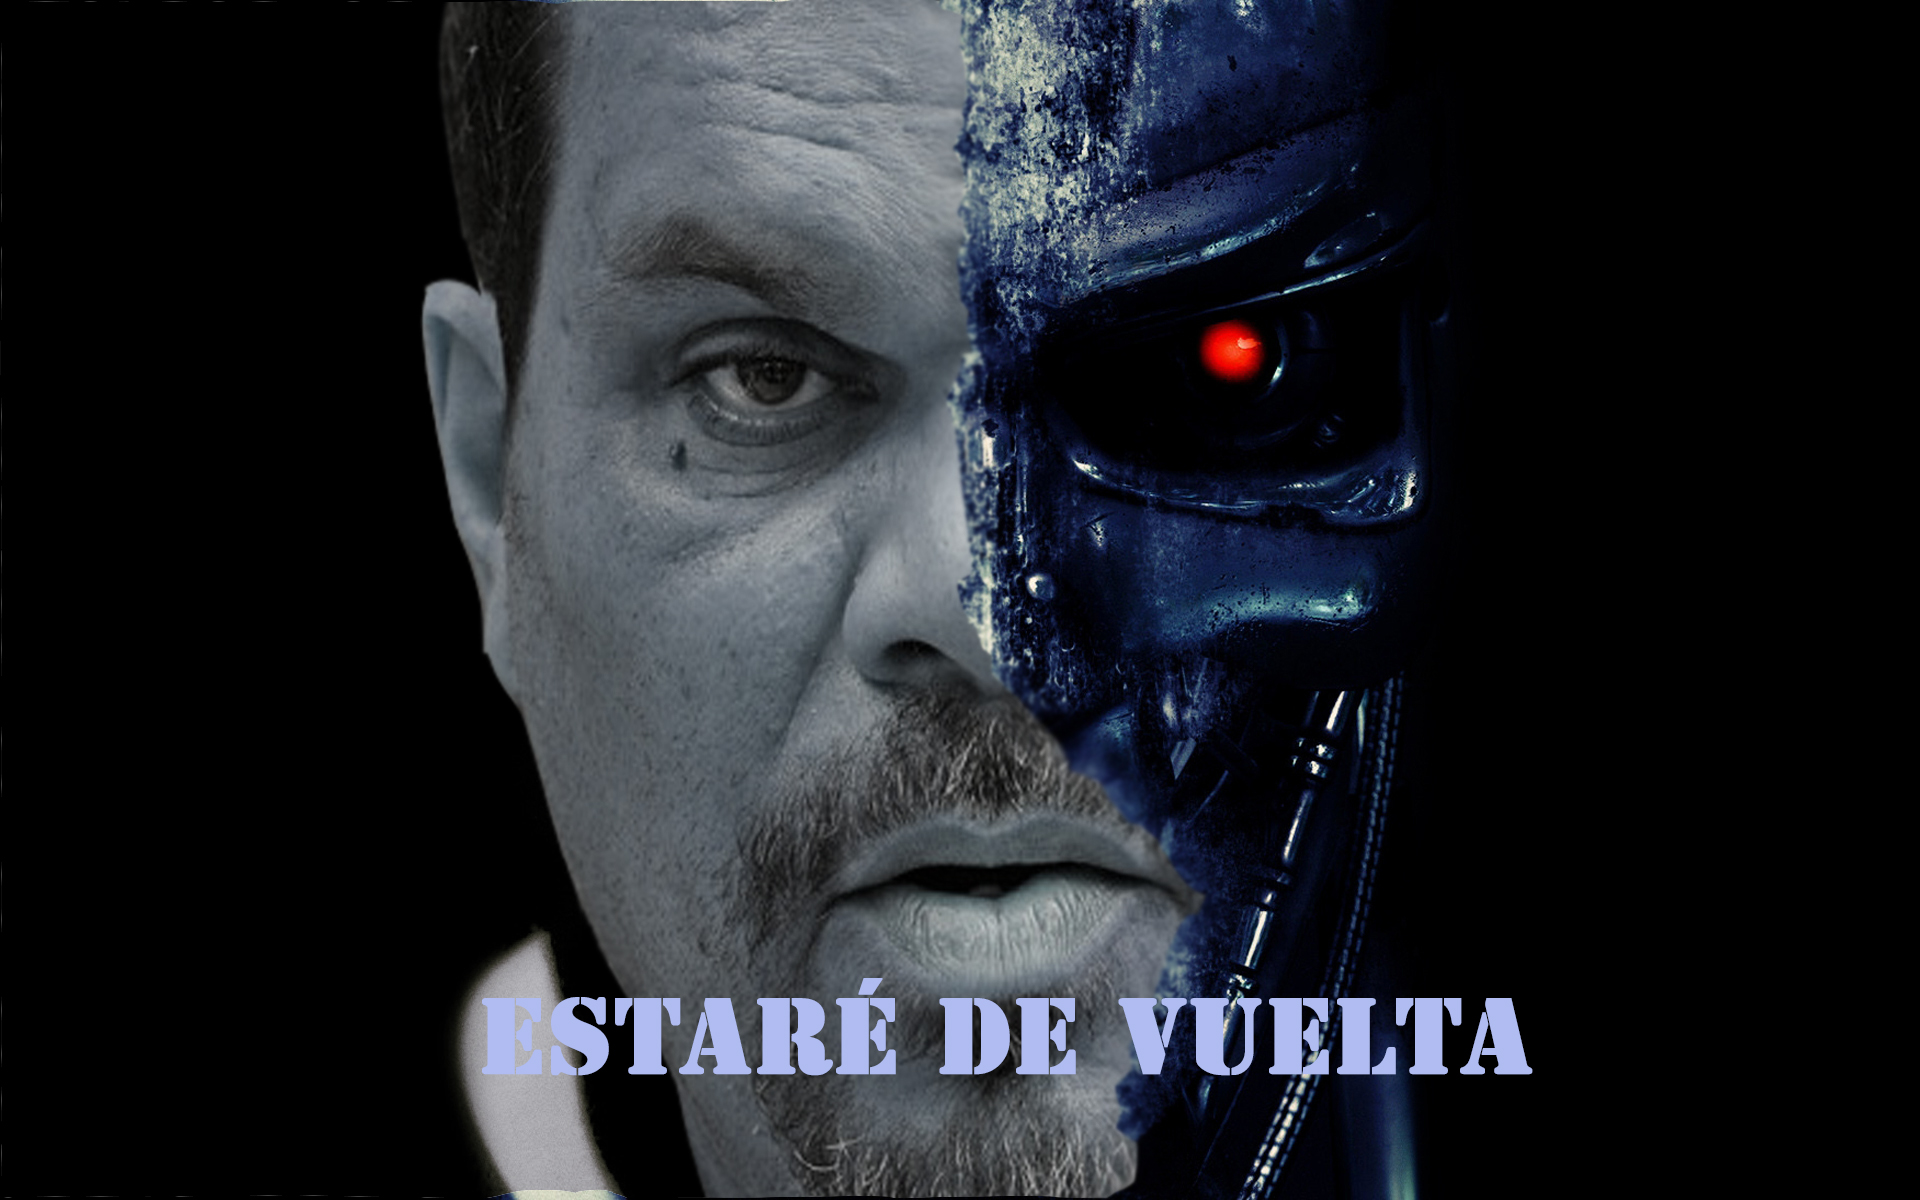 Luis Guzman as the Terminator Media by Austin Stephens